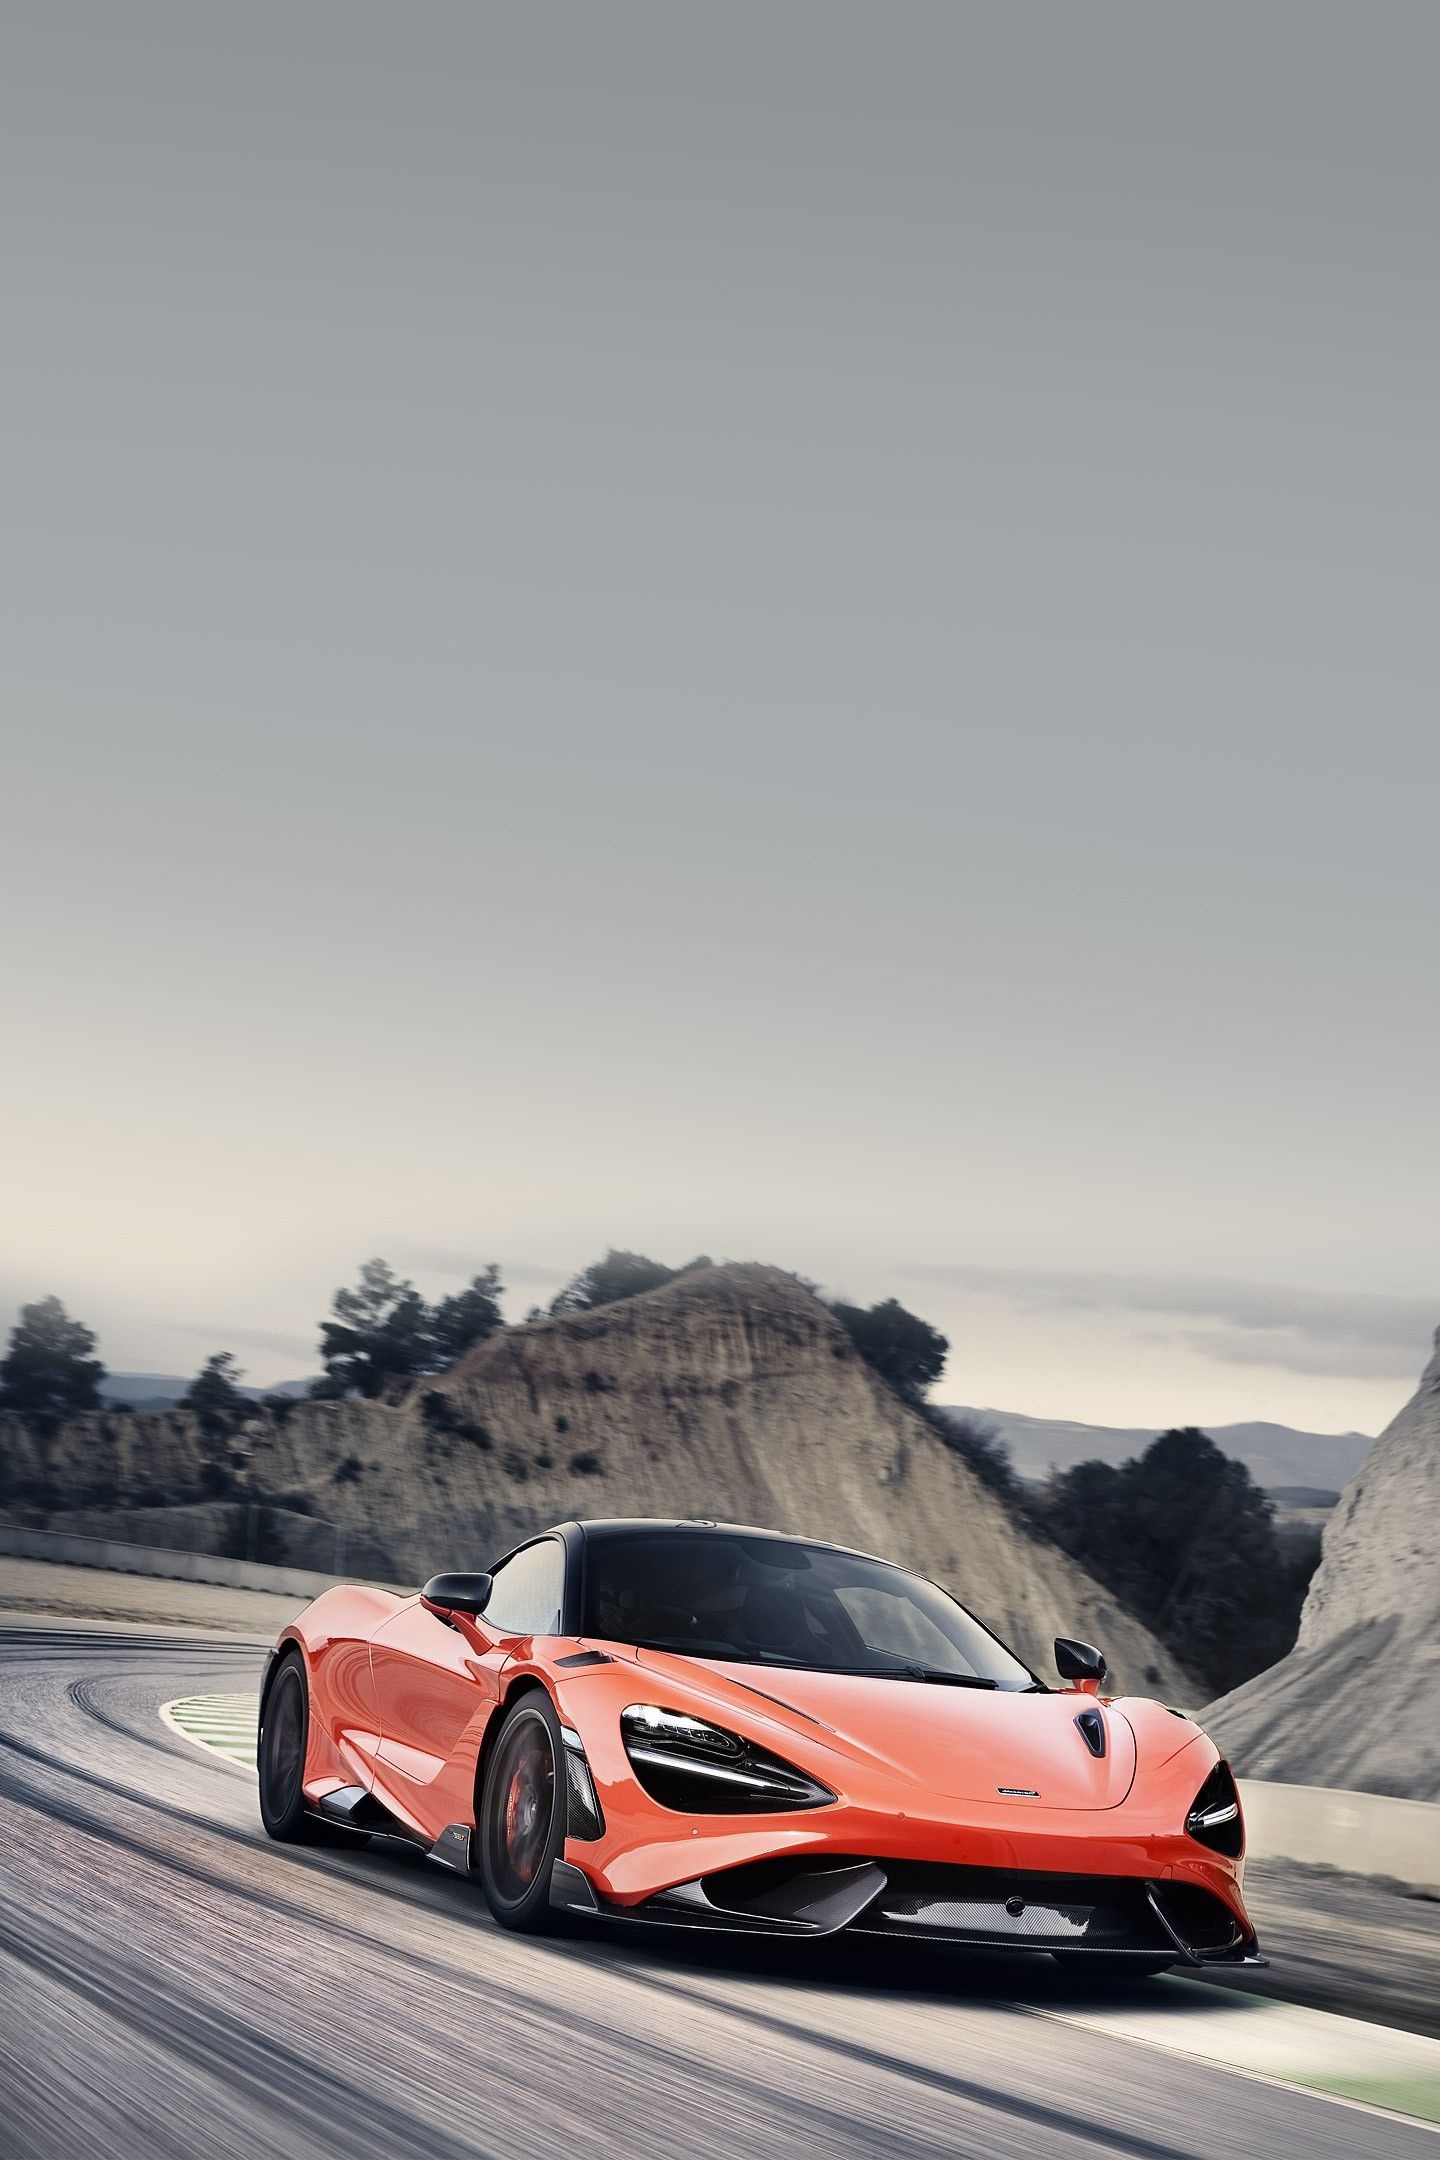 McLaren 765LT, Full HD wallpapers, Supercars wallpaper, Ultimate driving machine, 1440x2160 HD Phone